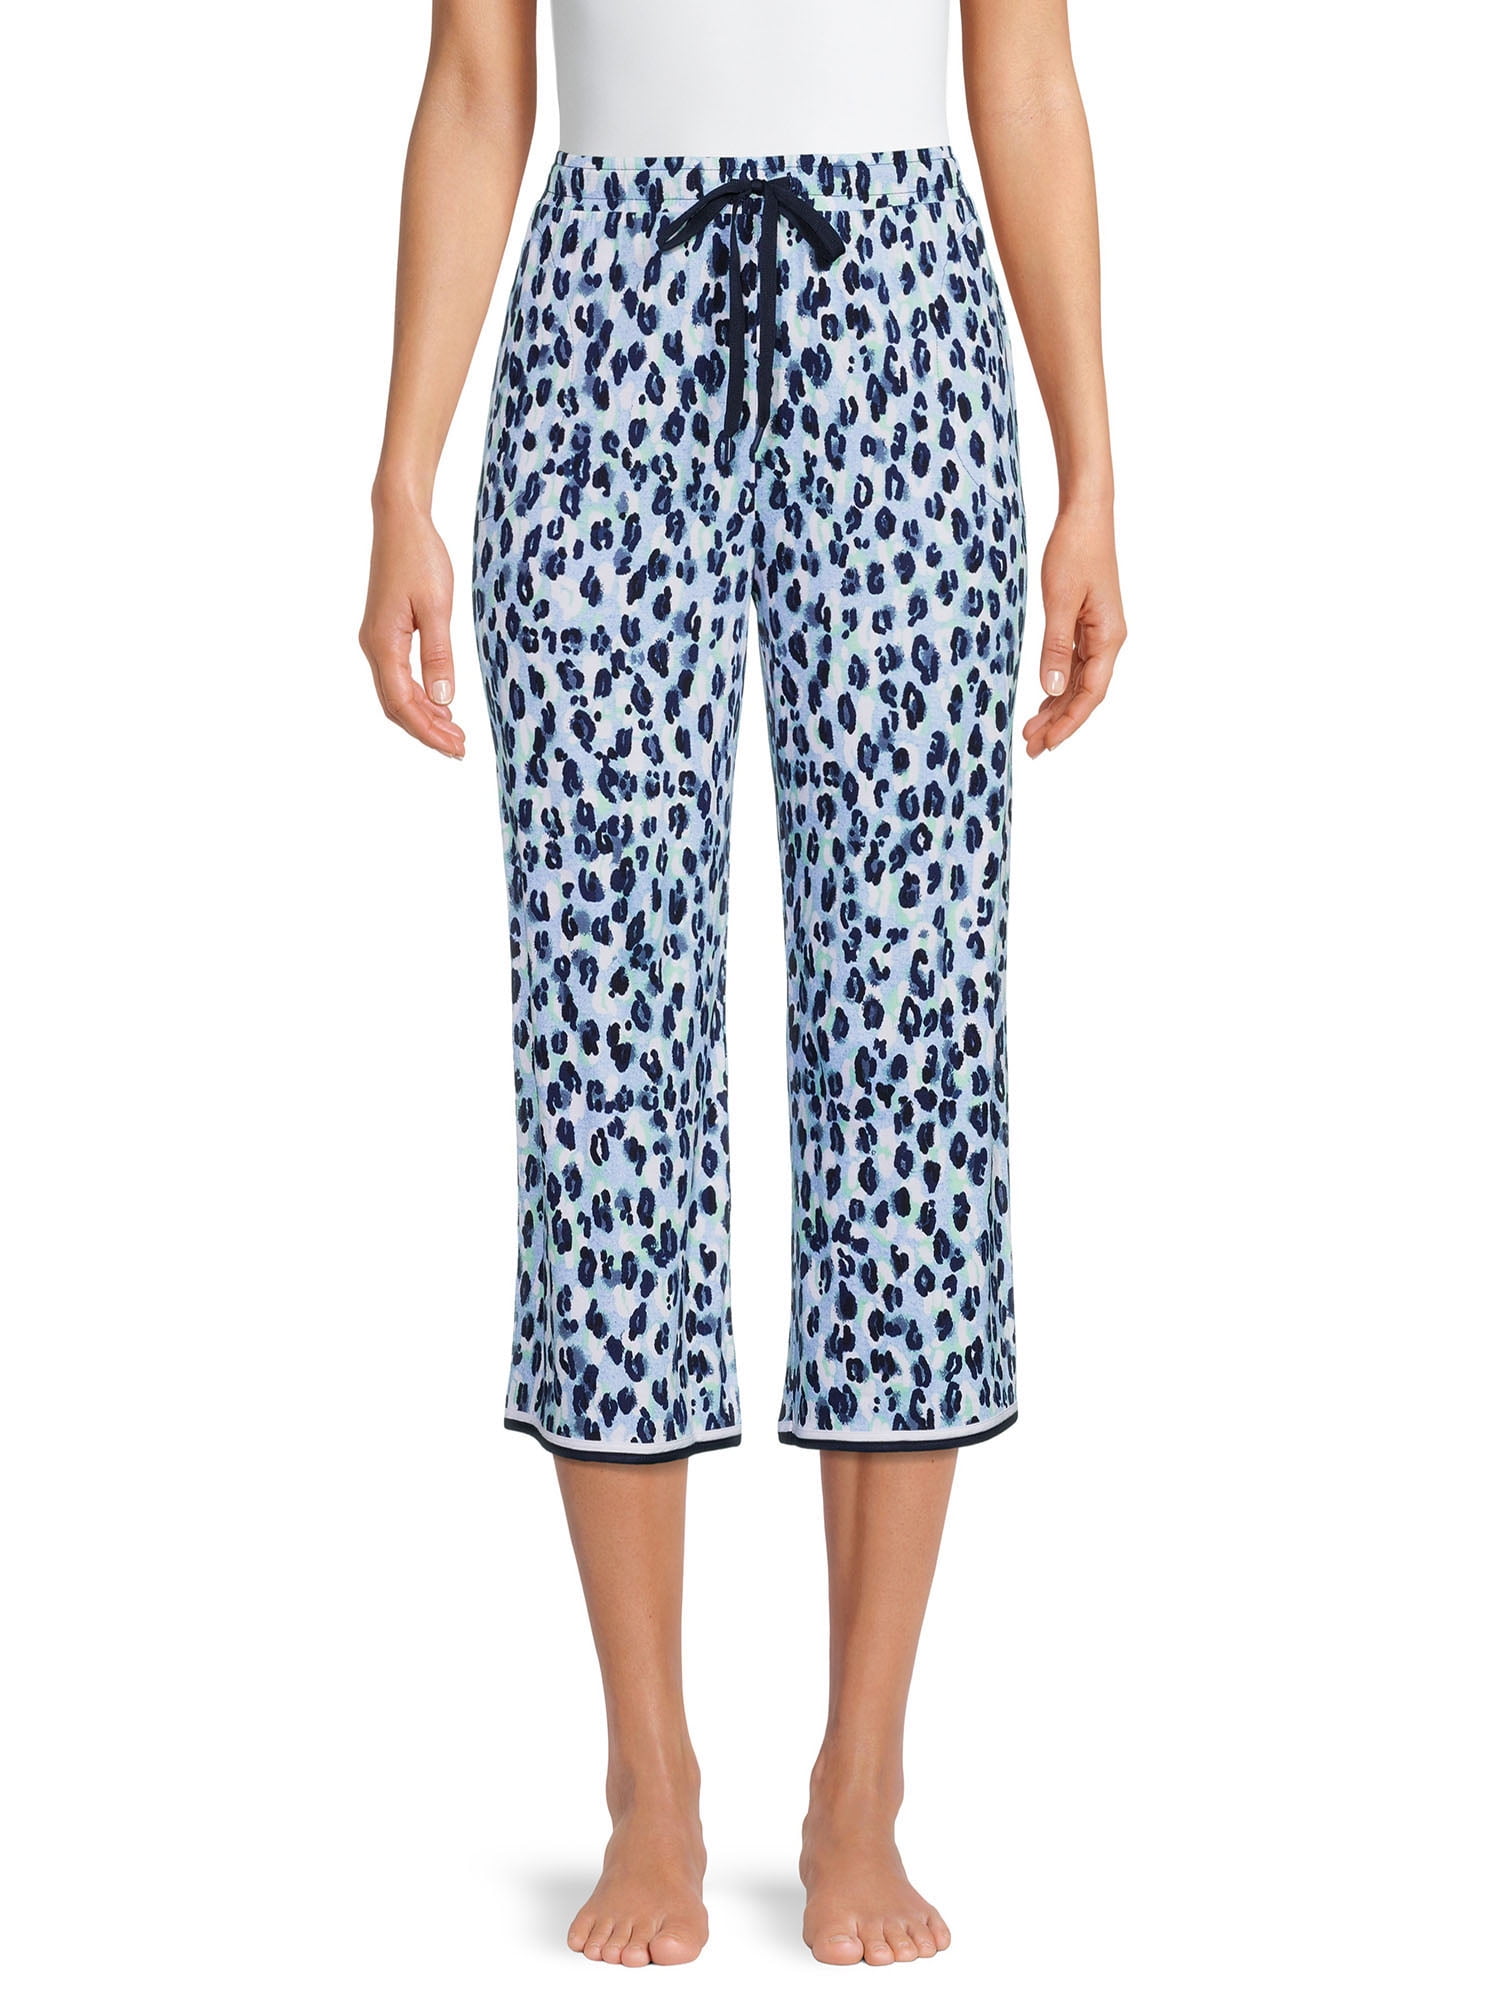 Sleep Sense Capri Pajama Pants for Women